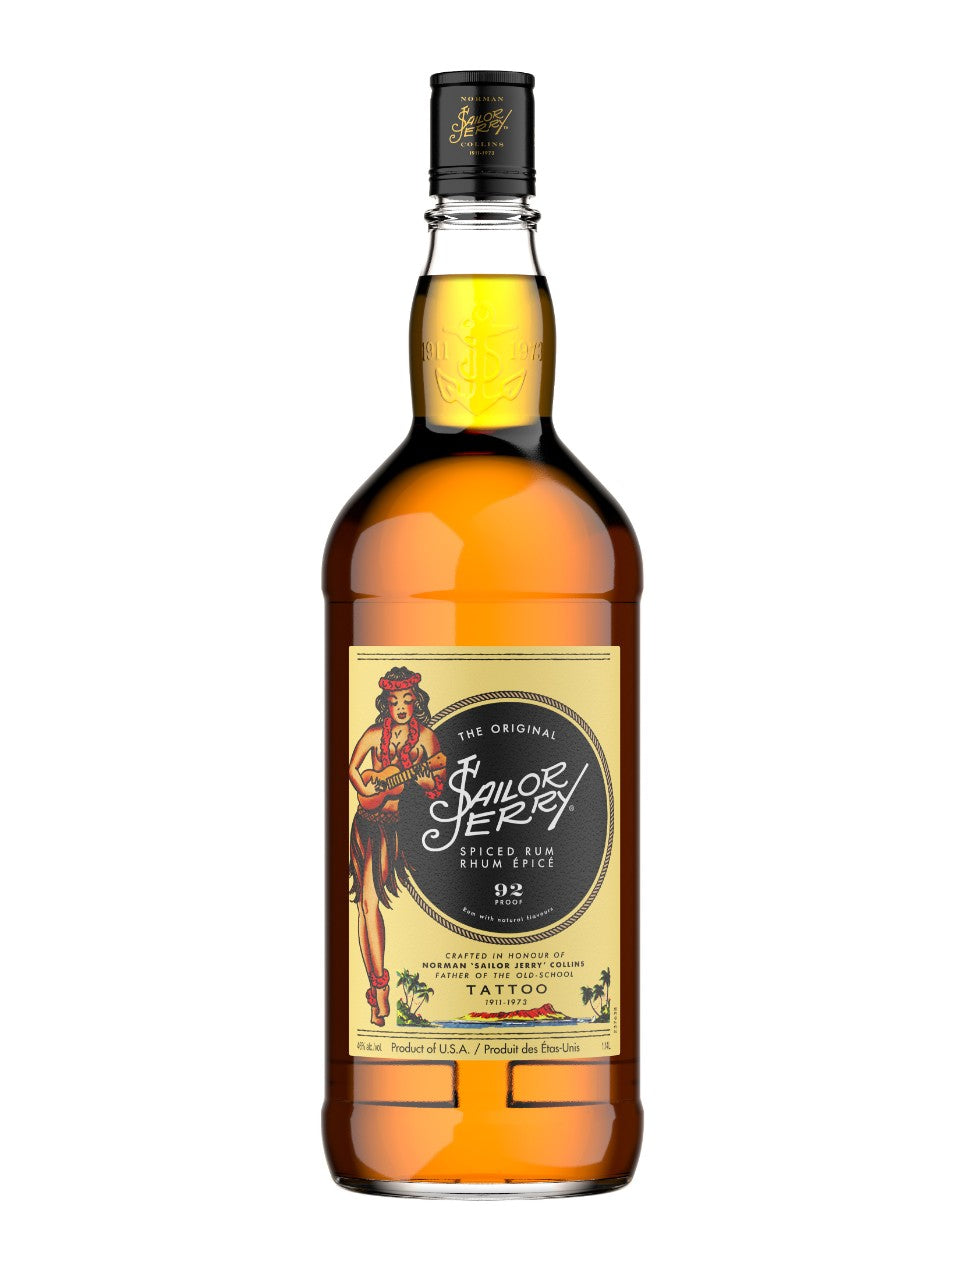 Sailor Jerry Spiced Rum 1140 mL bottle